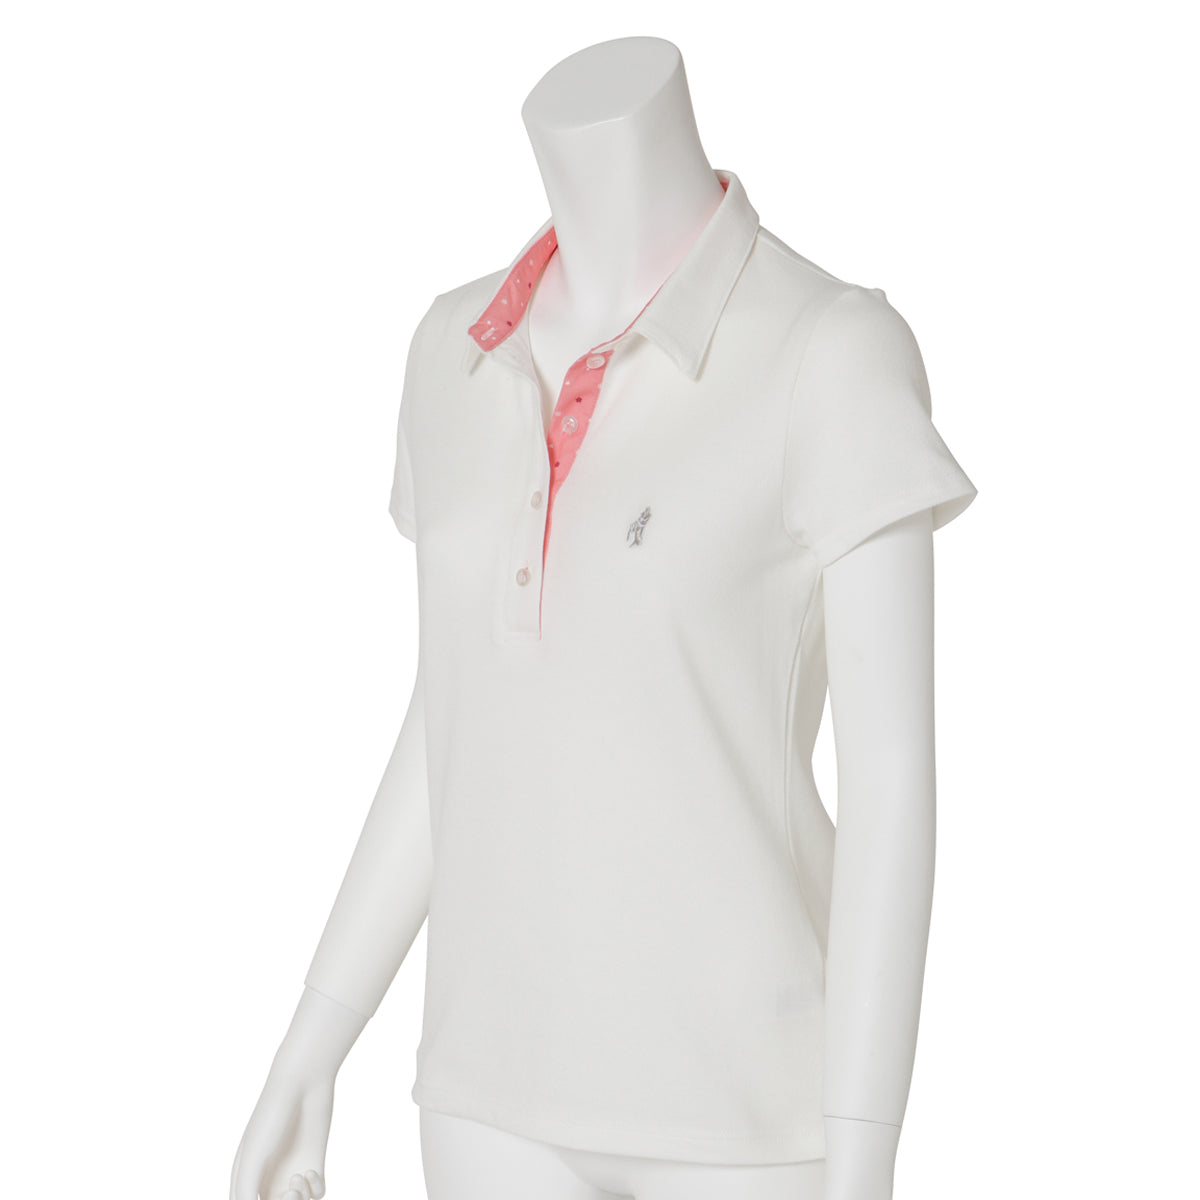 Ladies' Polo Shirt Short Sleeve 100% Cotton -15. Sakura Cherry Blossoms Design Made in Japan FORTUNA Tokyo